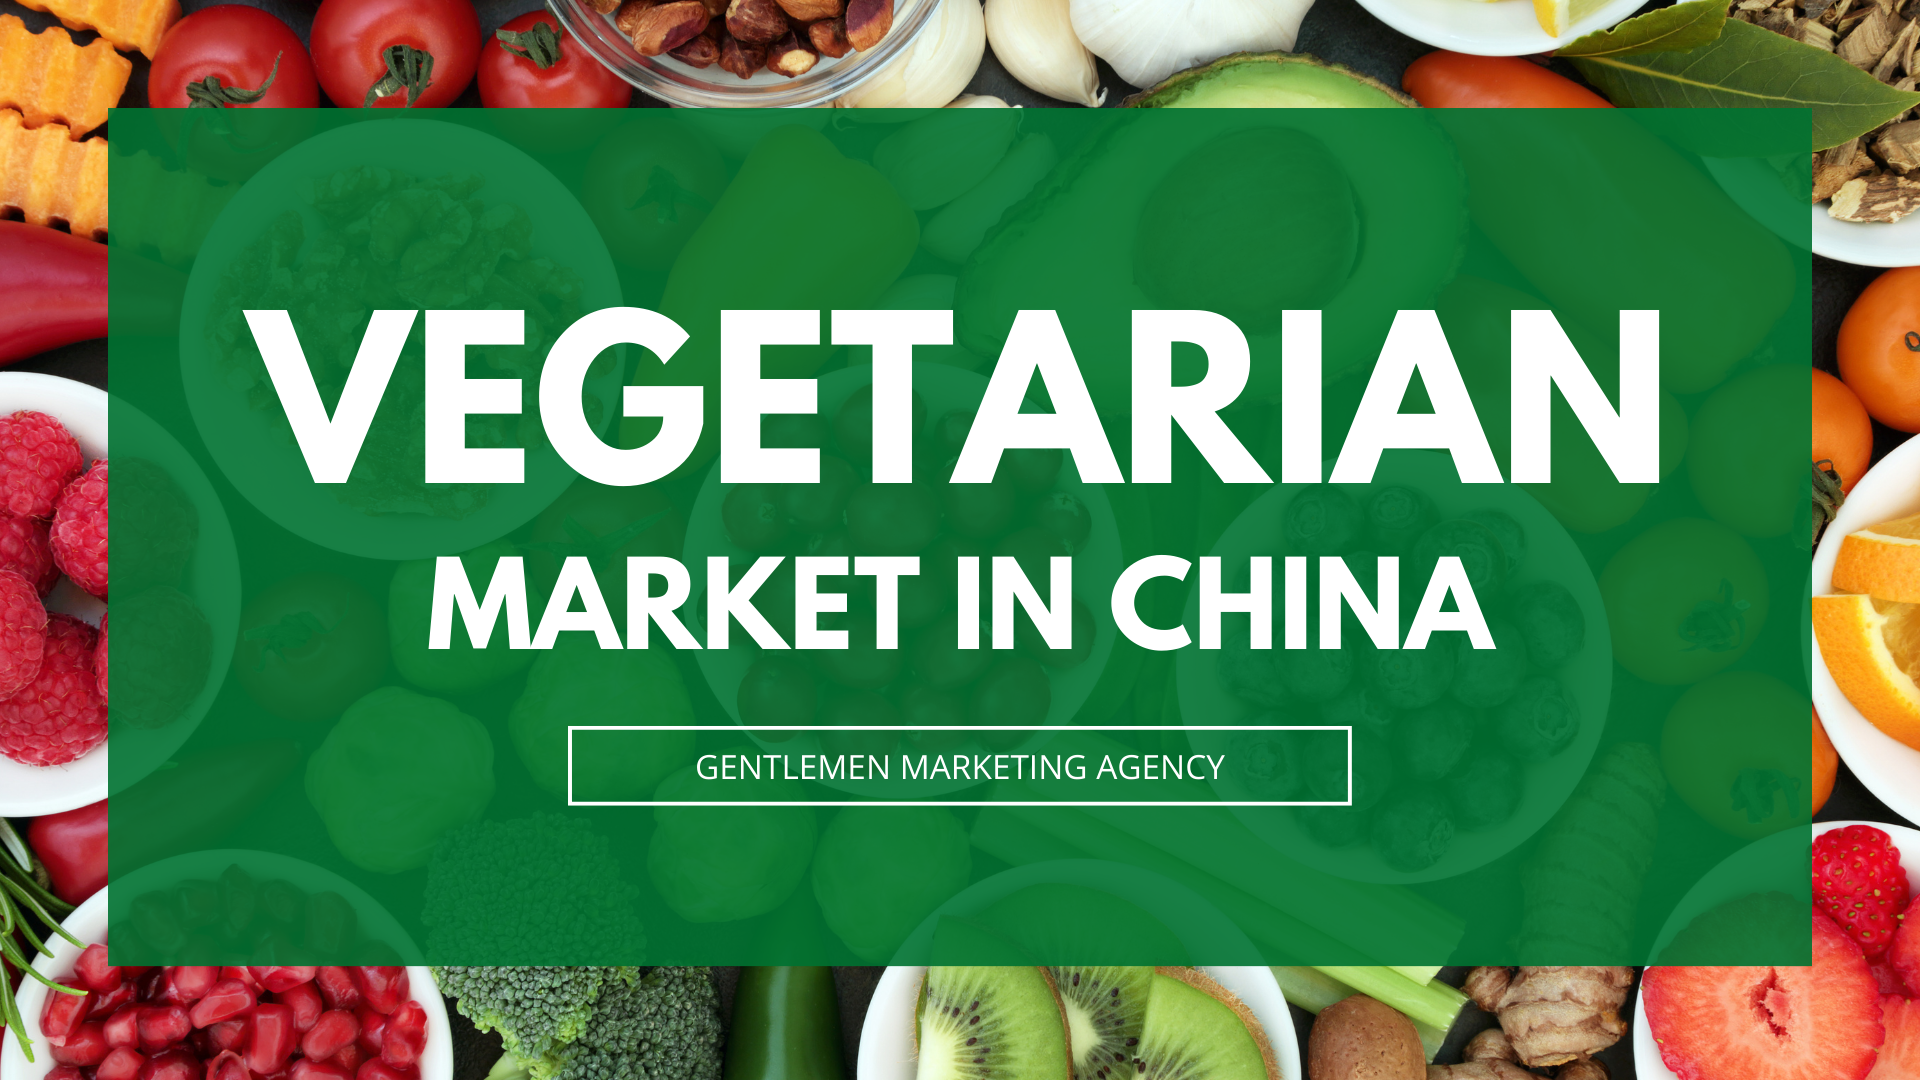 Vegetarian market in China